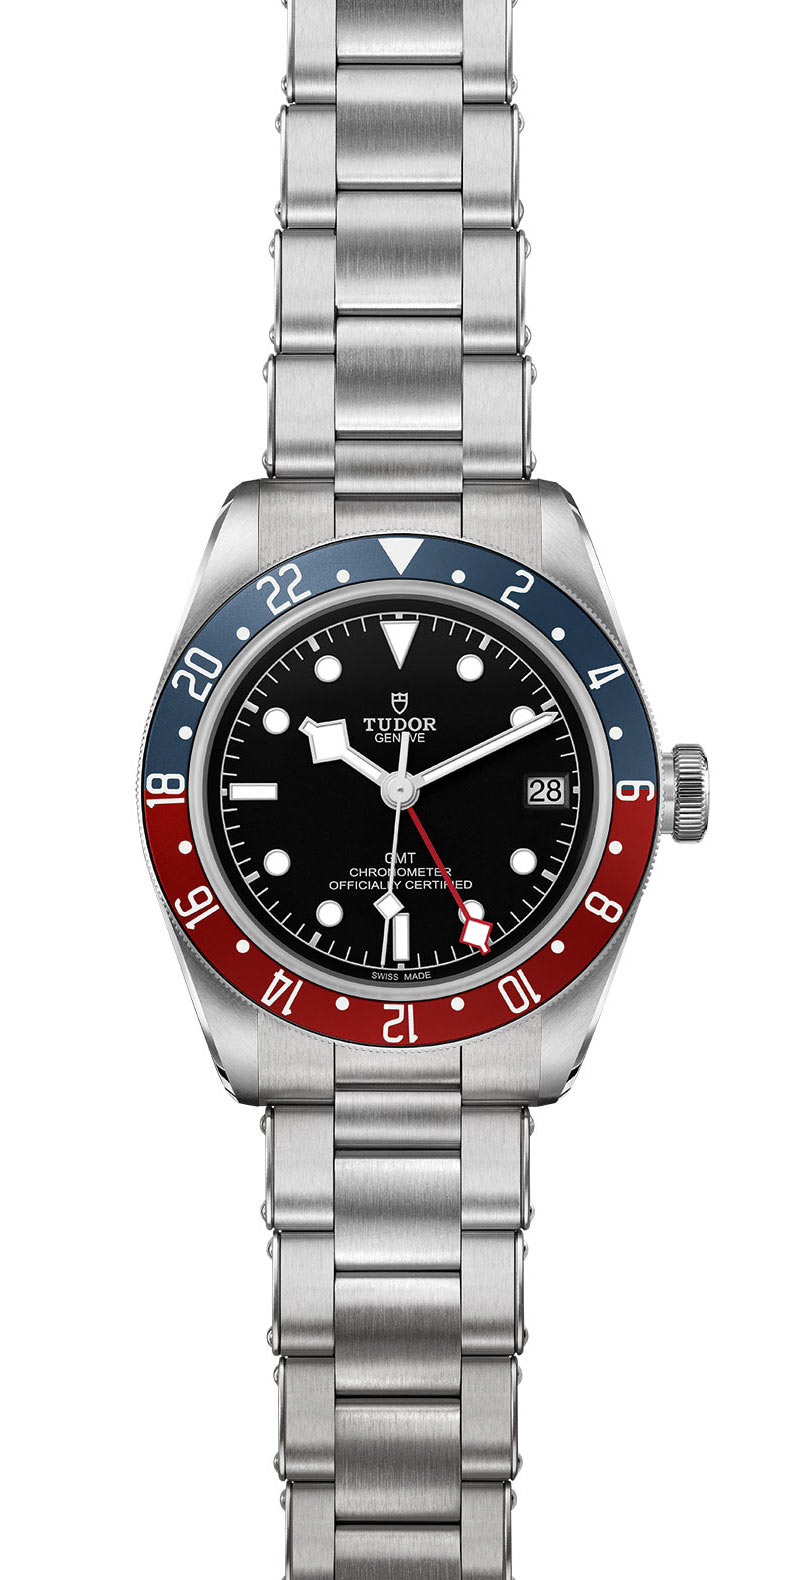 Black Bay GMT | 79830RB | Steel | M79830RB-0001 | Tudor Official Retailer - Siam Swiss